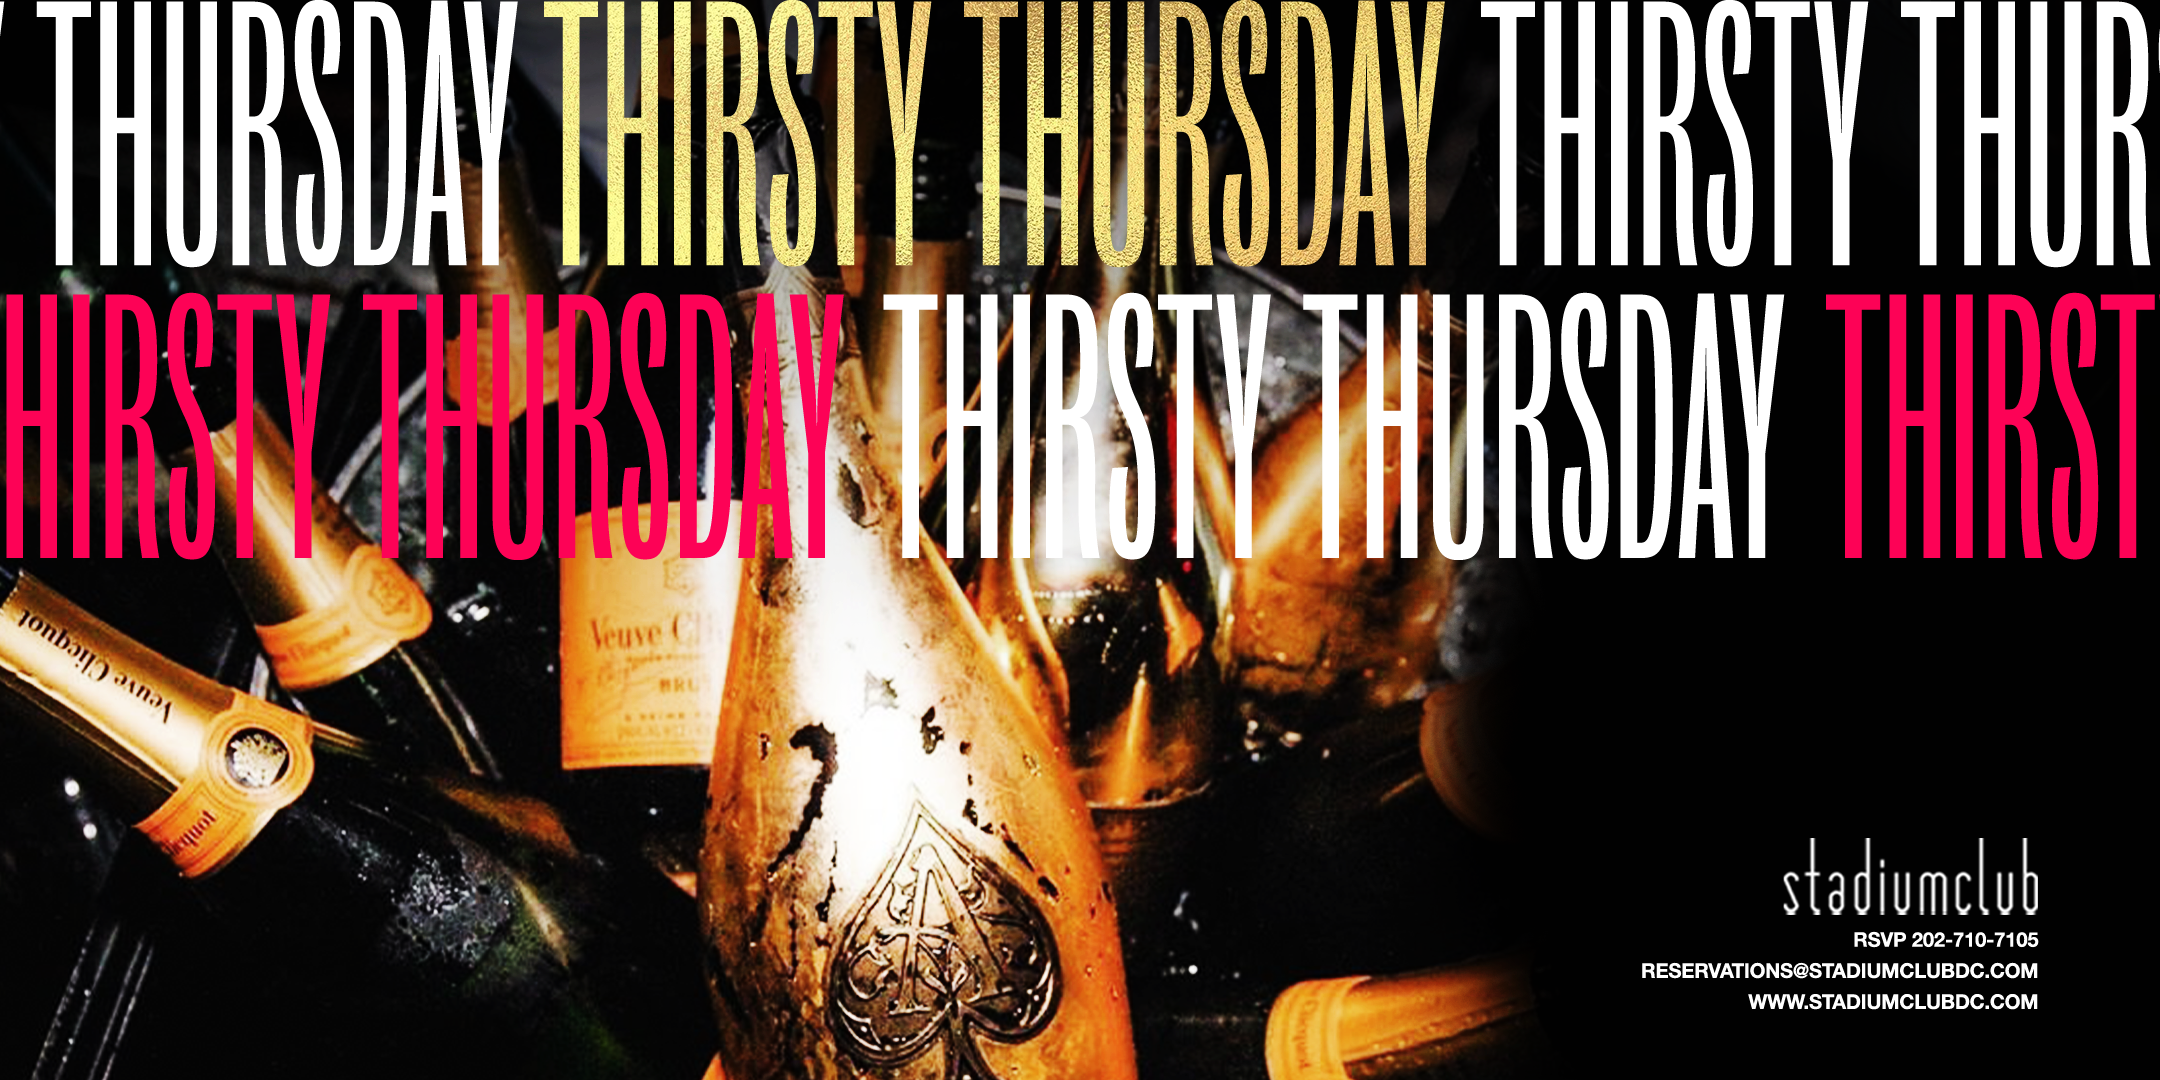 Thirsty Thursday's